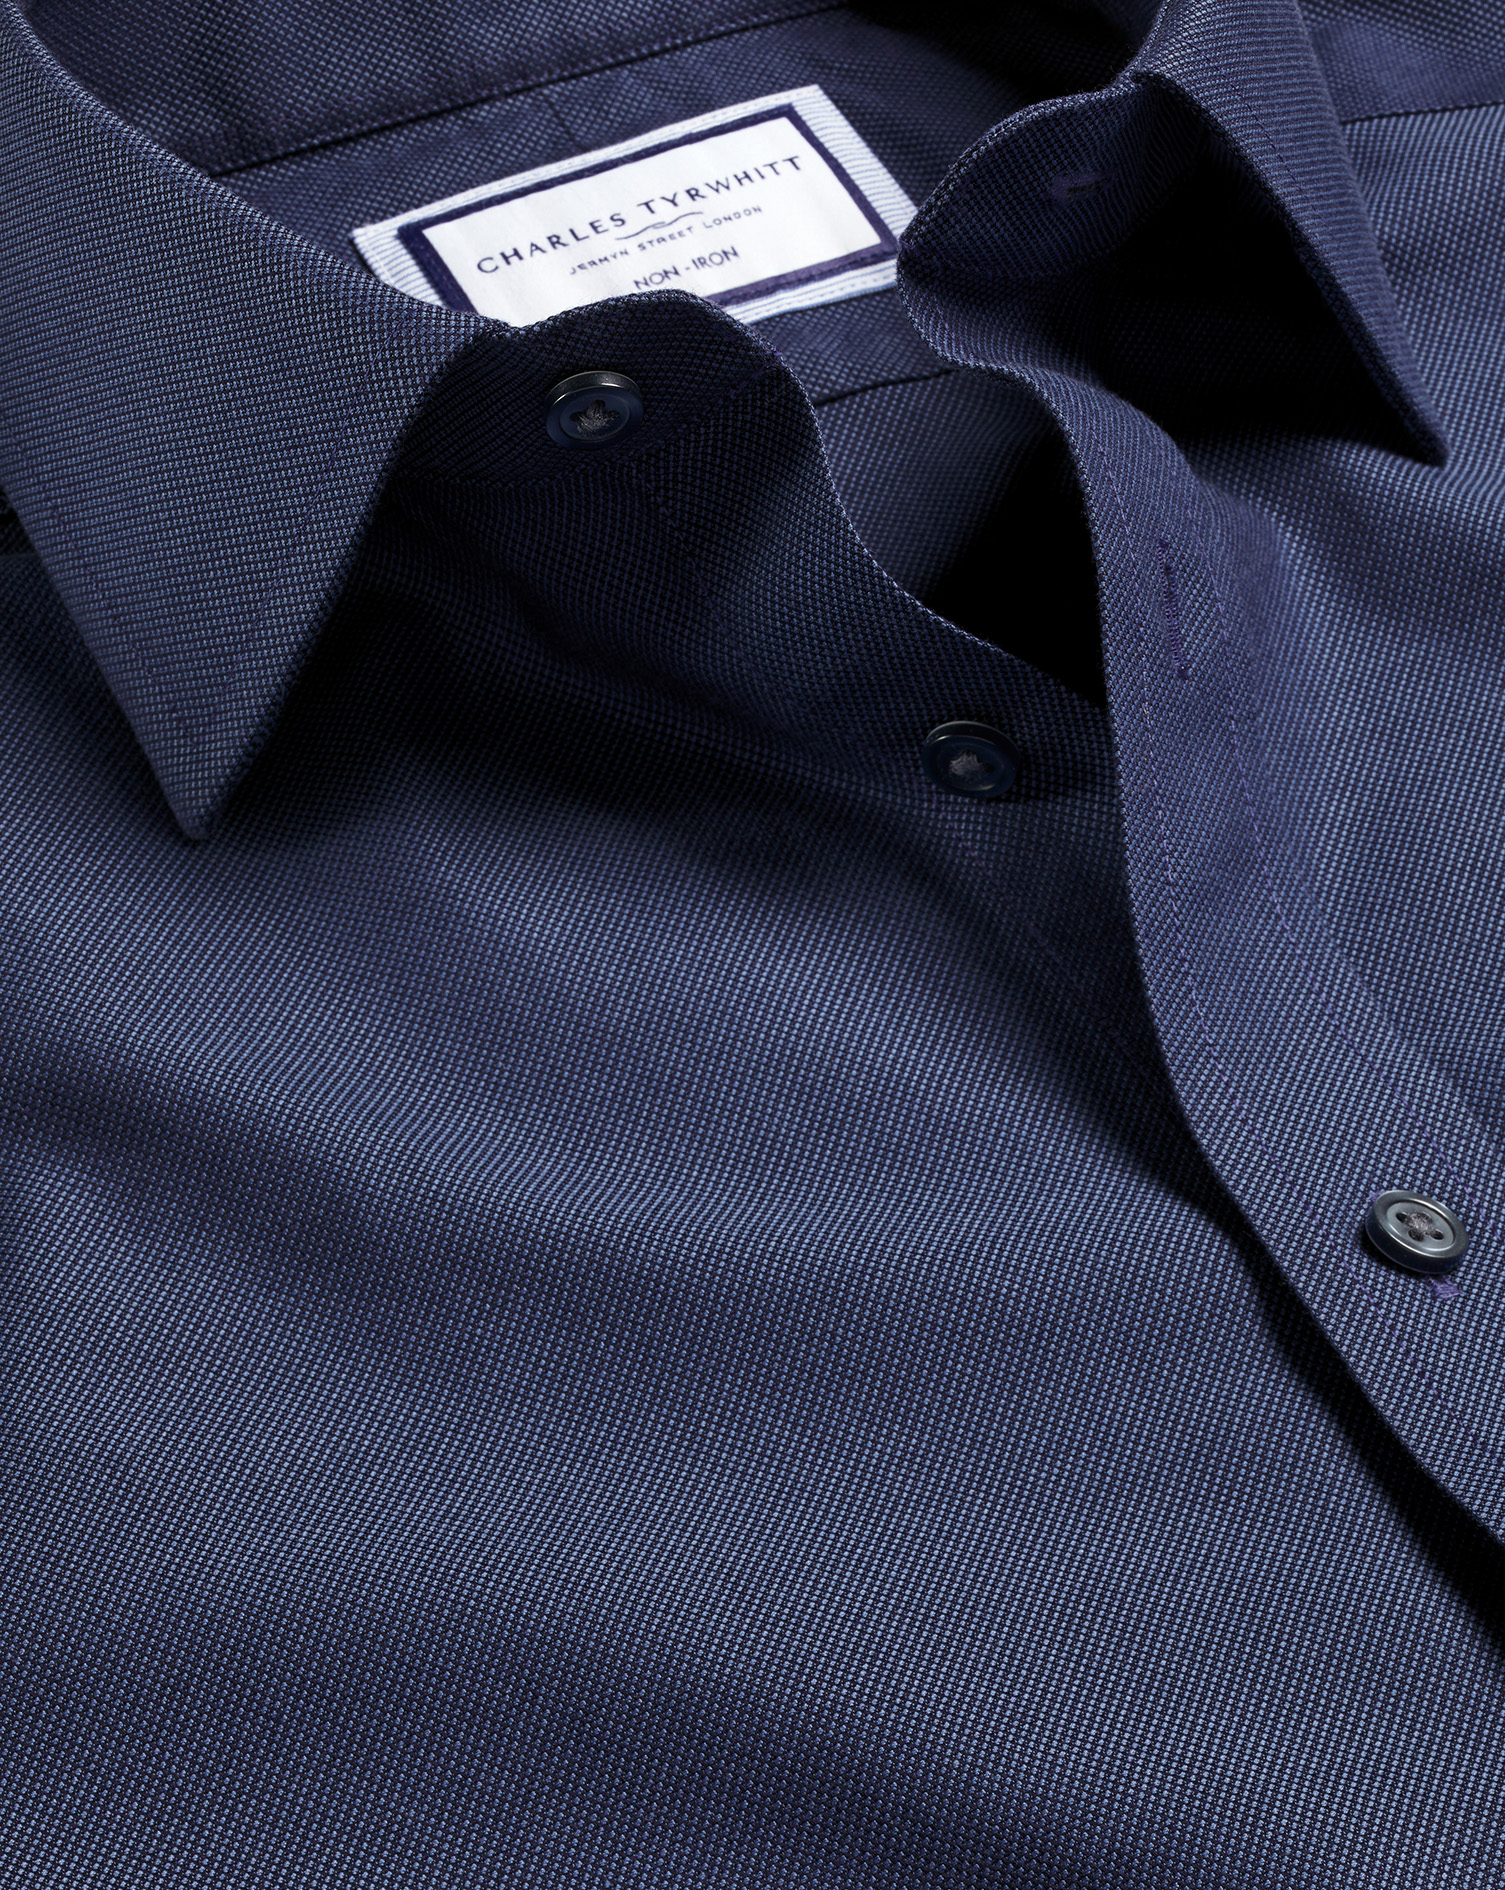 Men's Charles Tyrwhitt Non-Iron Royal Oxford Dress Shirt - French Blue French Cuff Size 16/33 Cotton